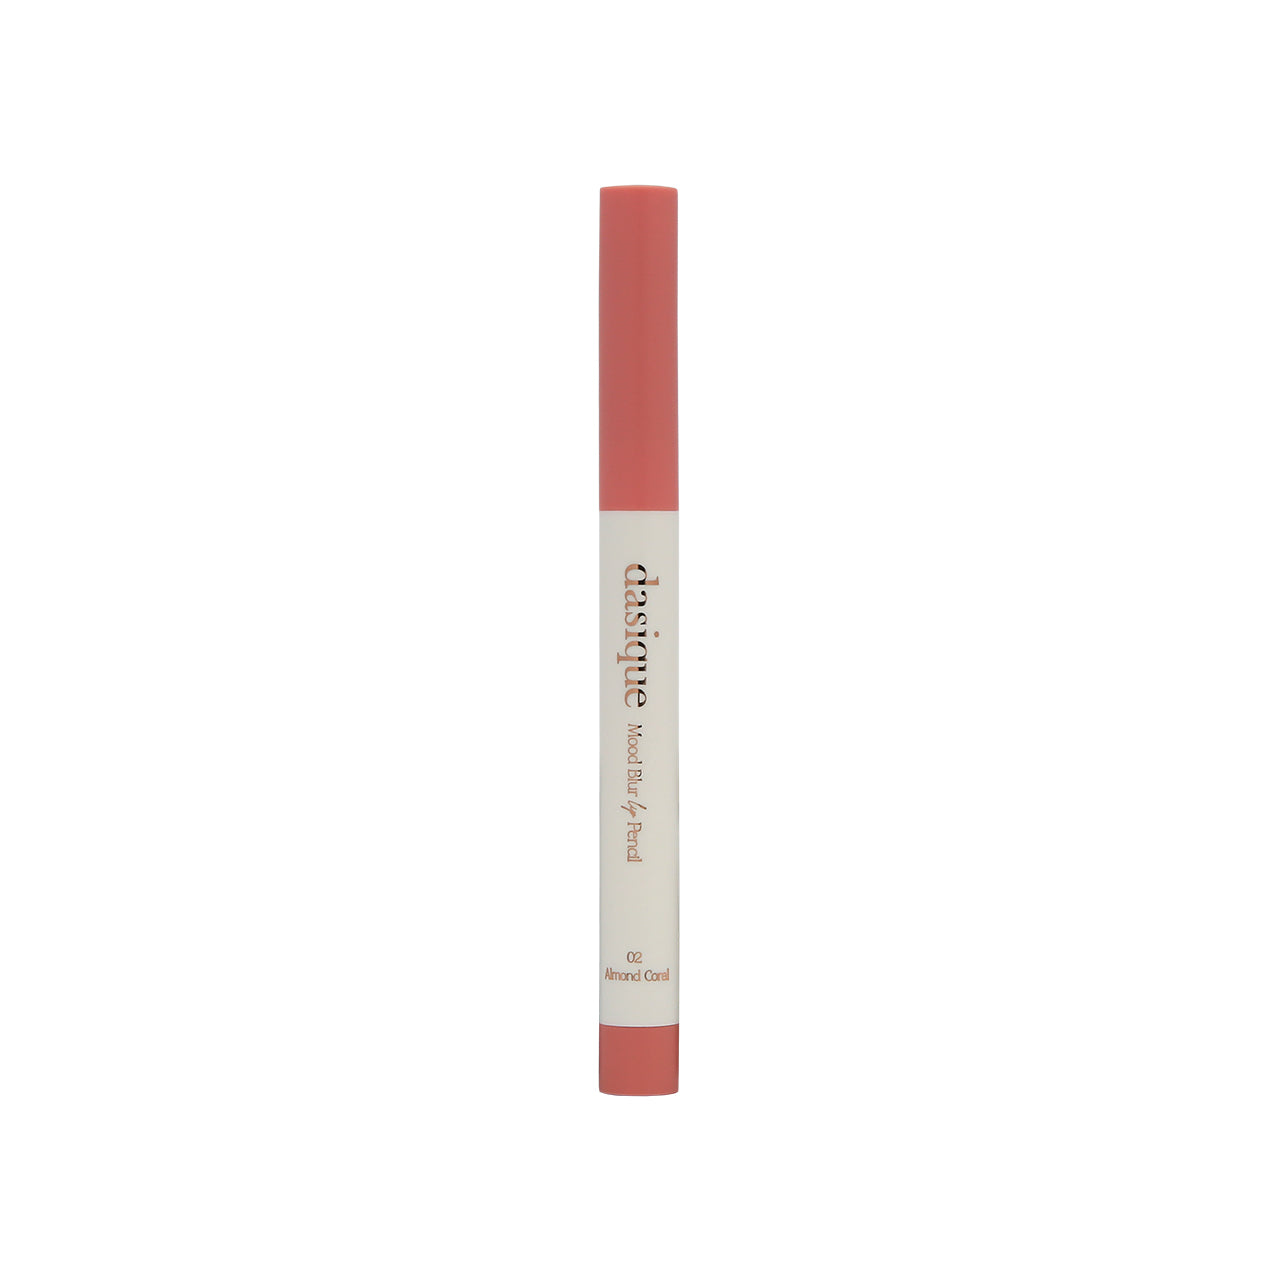 Dasique Mood Blur Lip Pencil (#02 Almond Coral) 0.9g